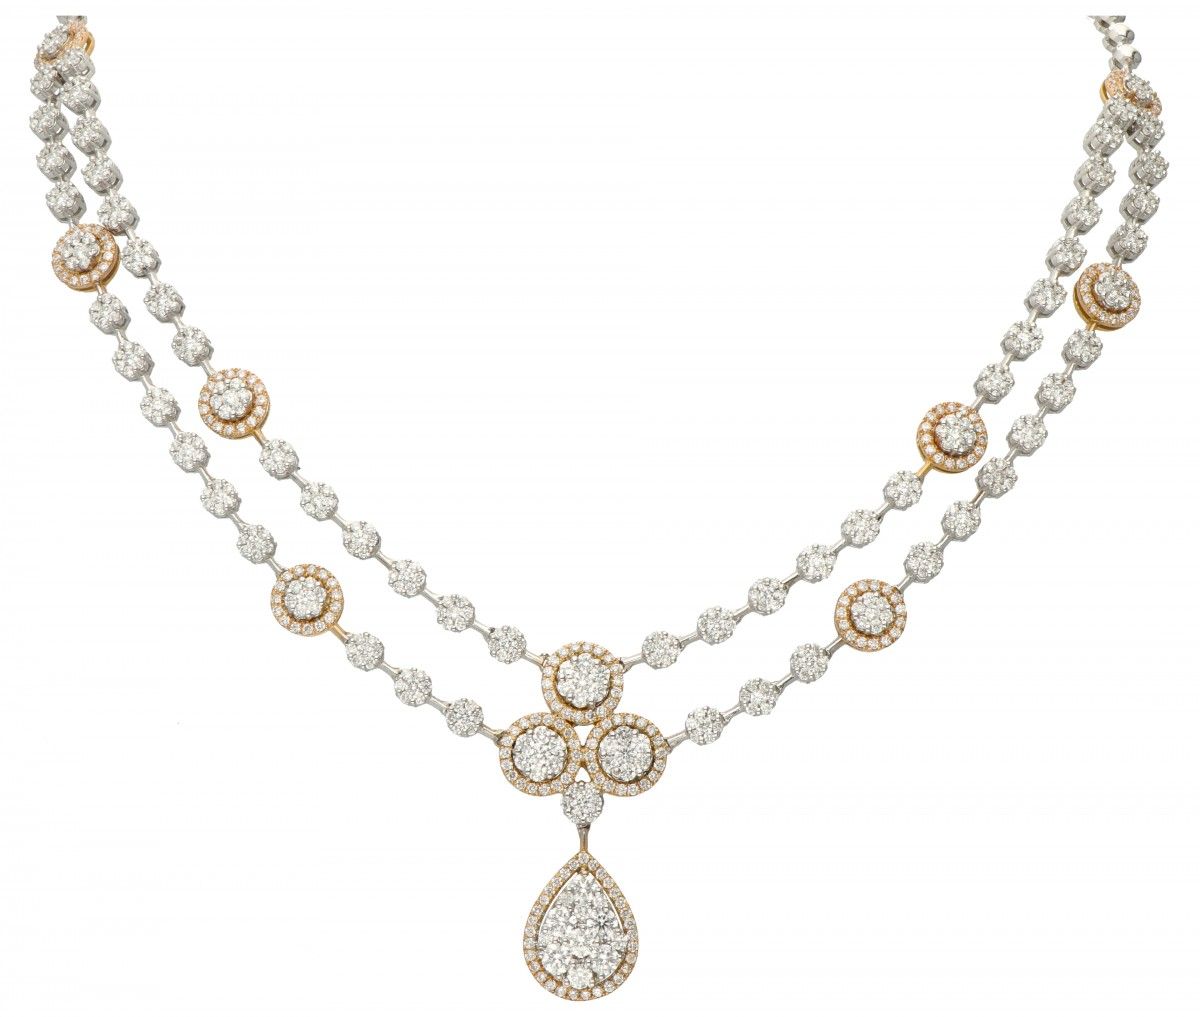 18K. Bicolor gold entourage necklace set with approx. 4.66 ct. Diamond. Hallmark&hellip;